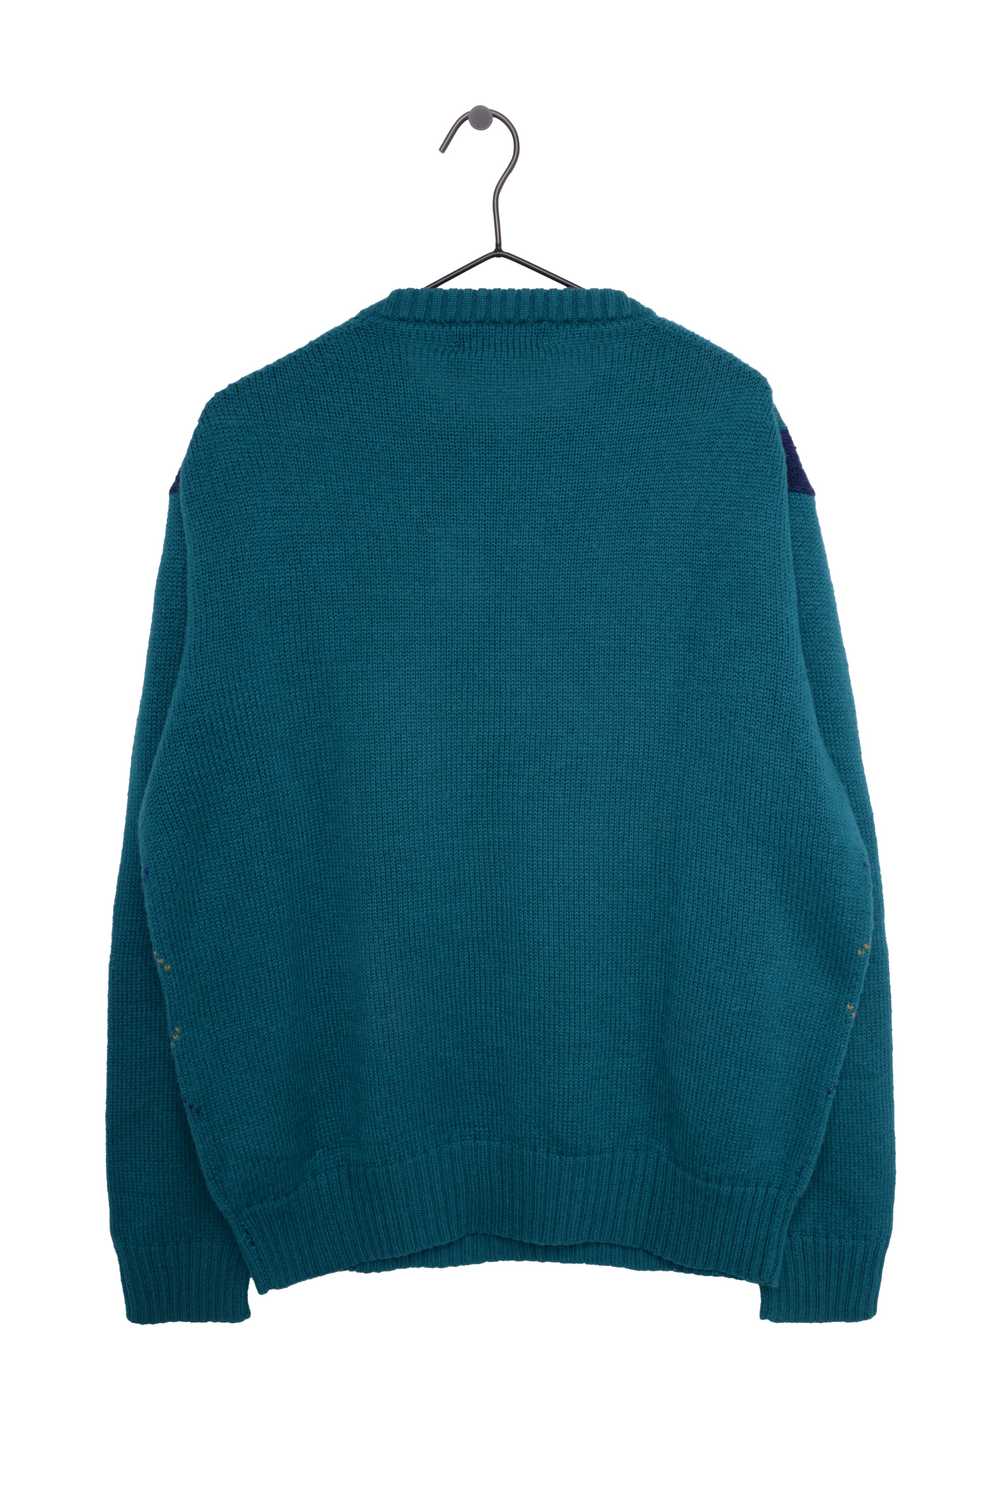 Teal Argyle Sweater - image 3